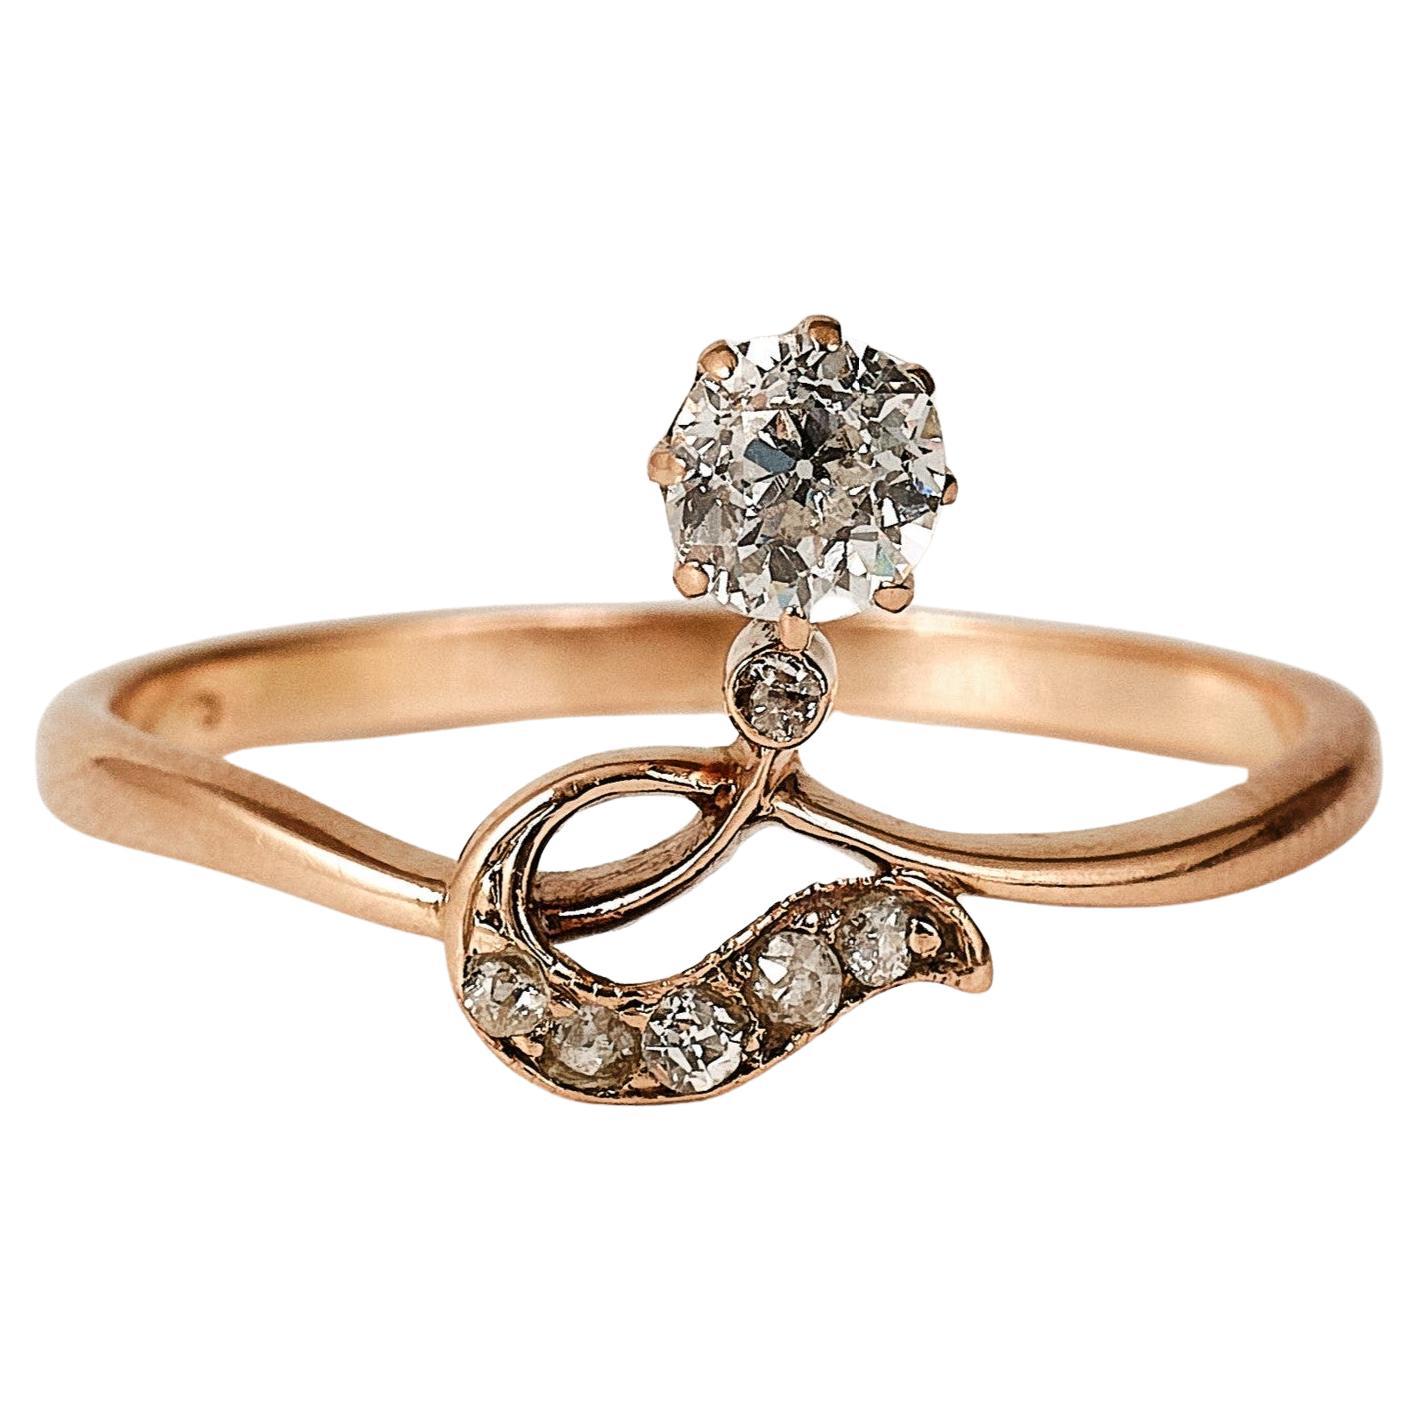 Art Nouveau rose gold diamond ring